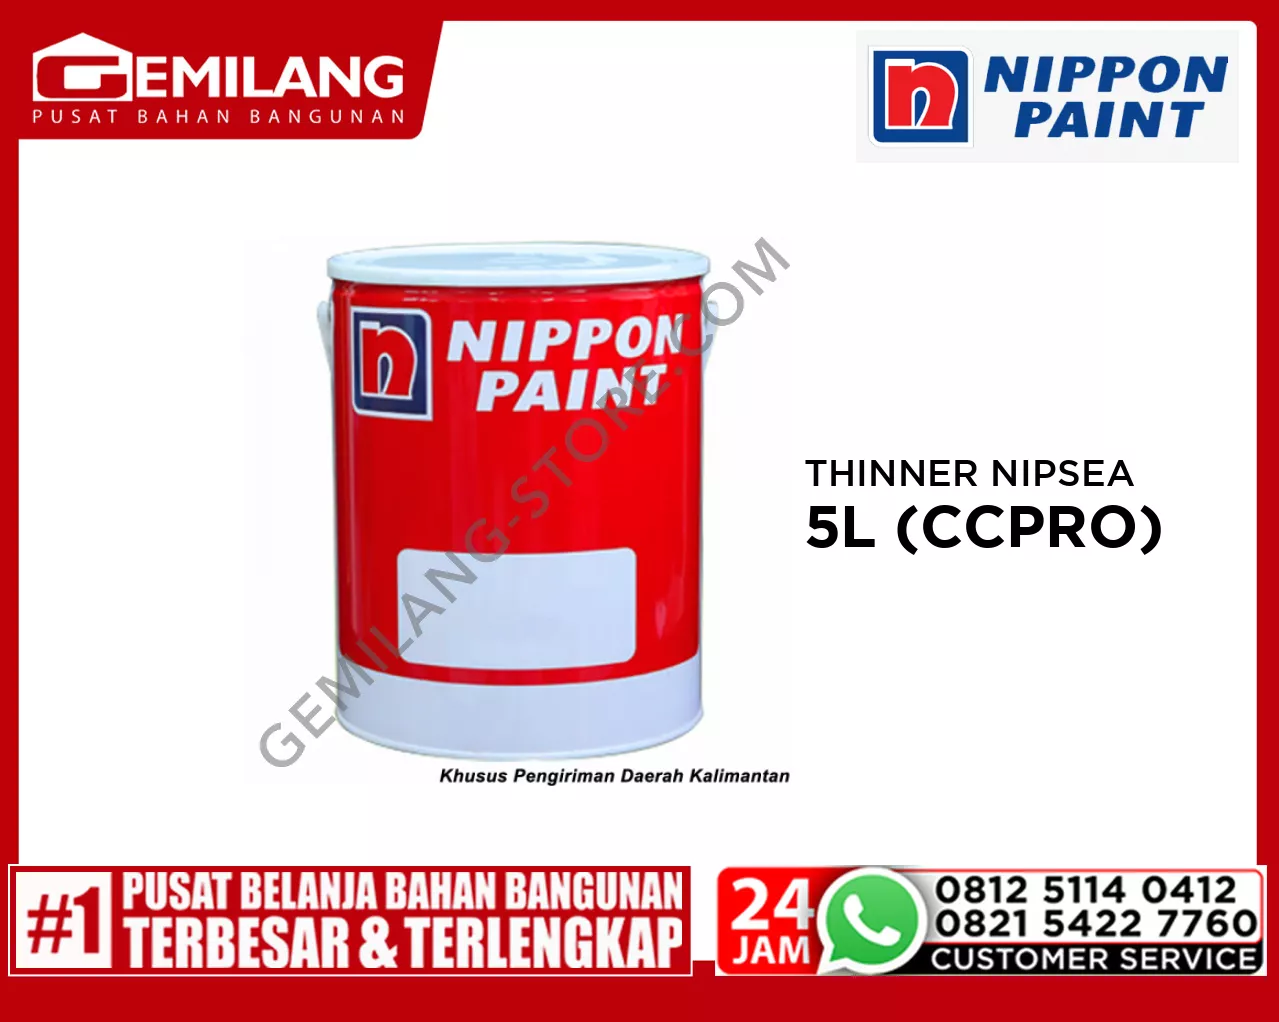 NIPPON THINNER NIPSEA ACRYLIC 5ltr (CCPRO)